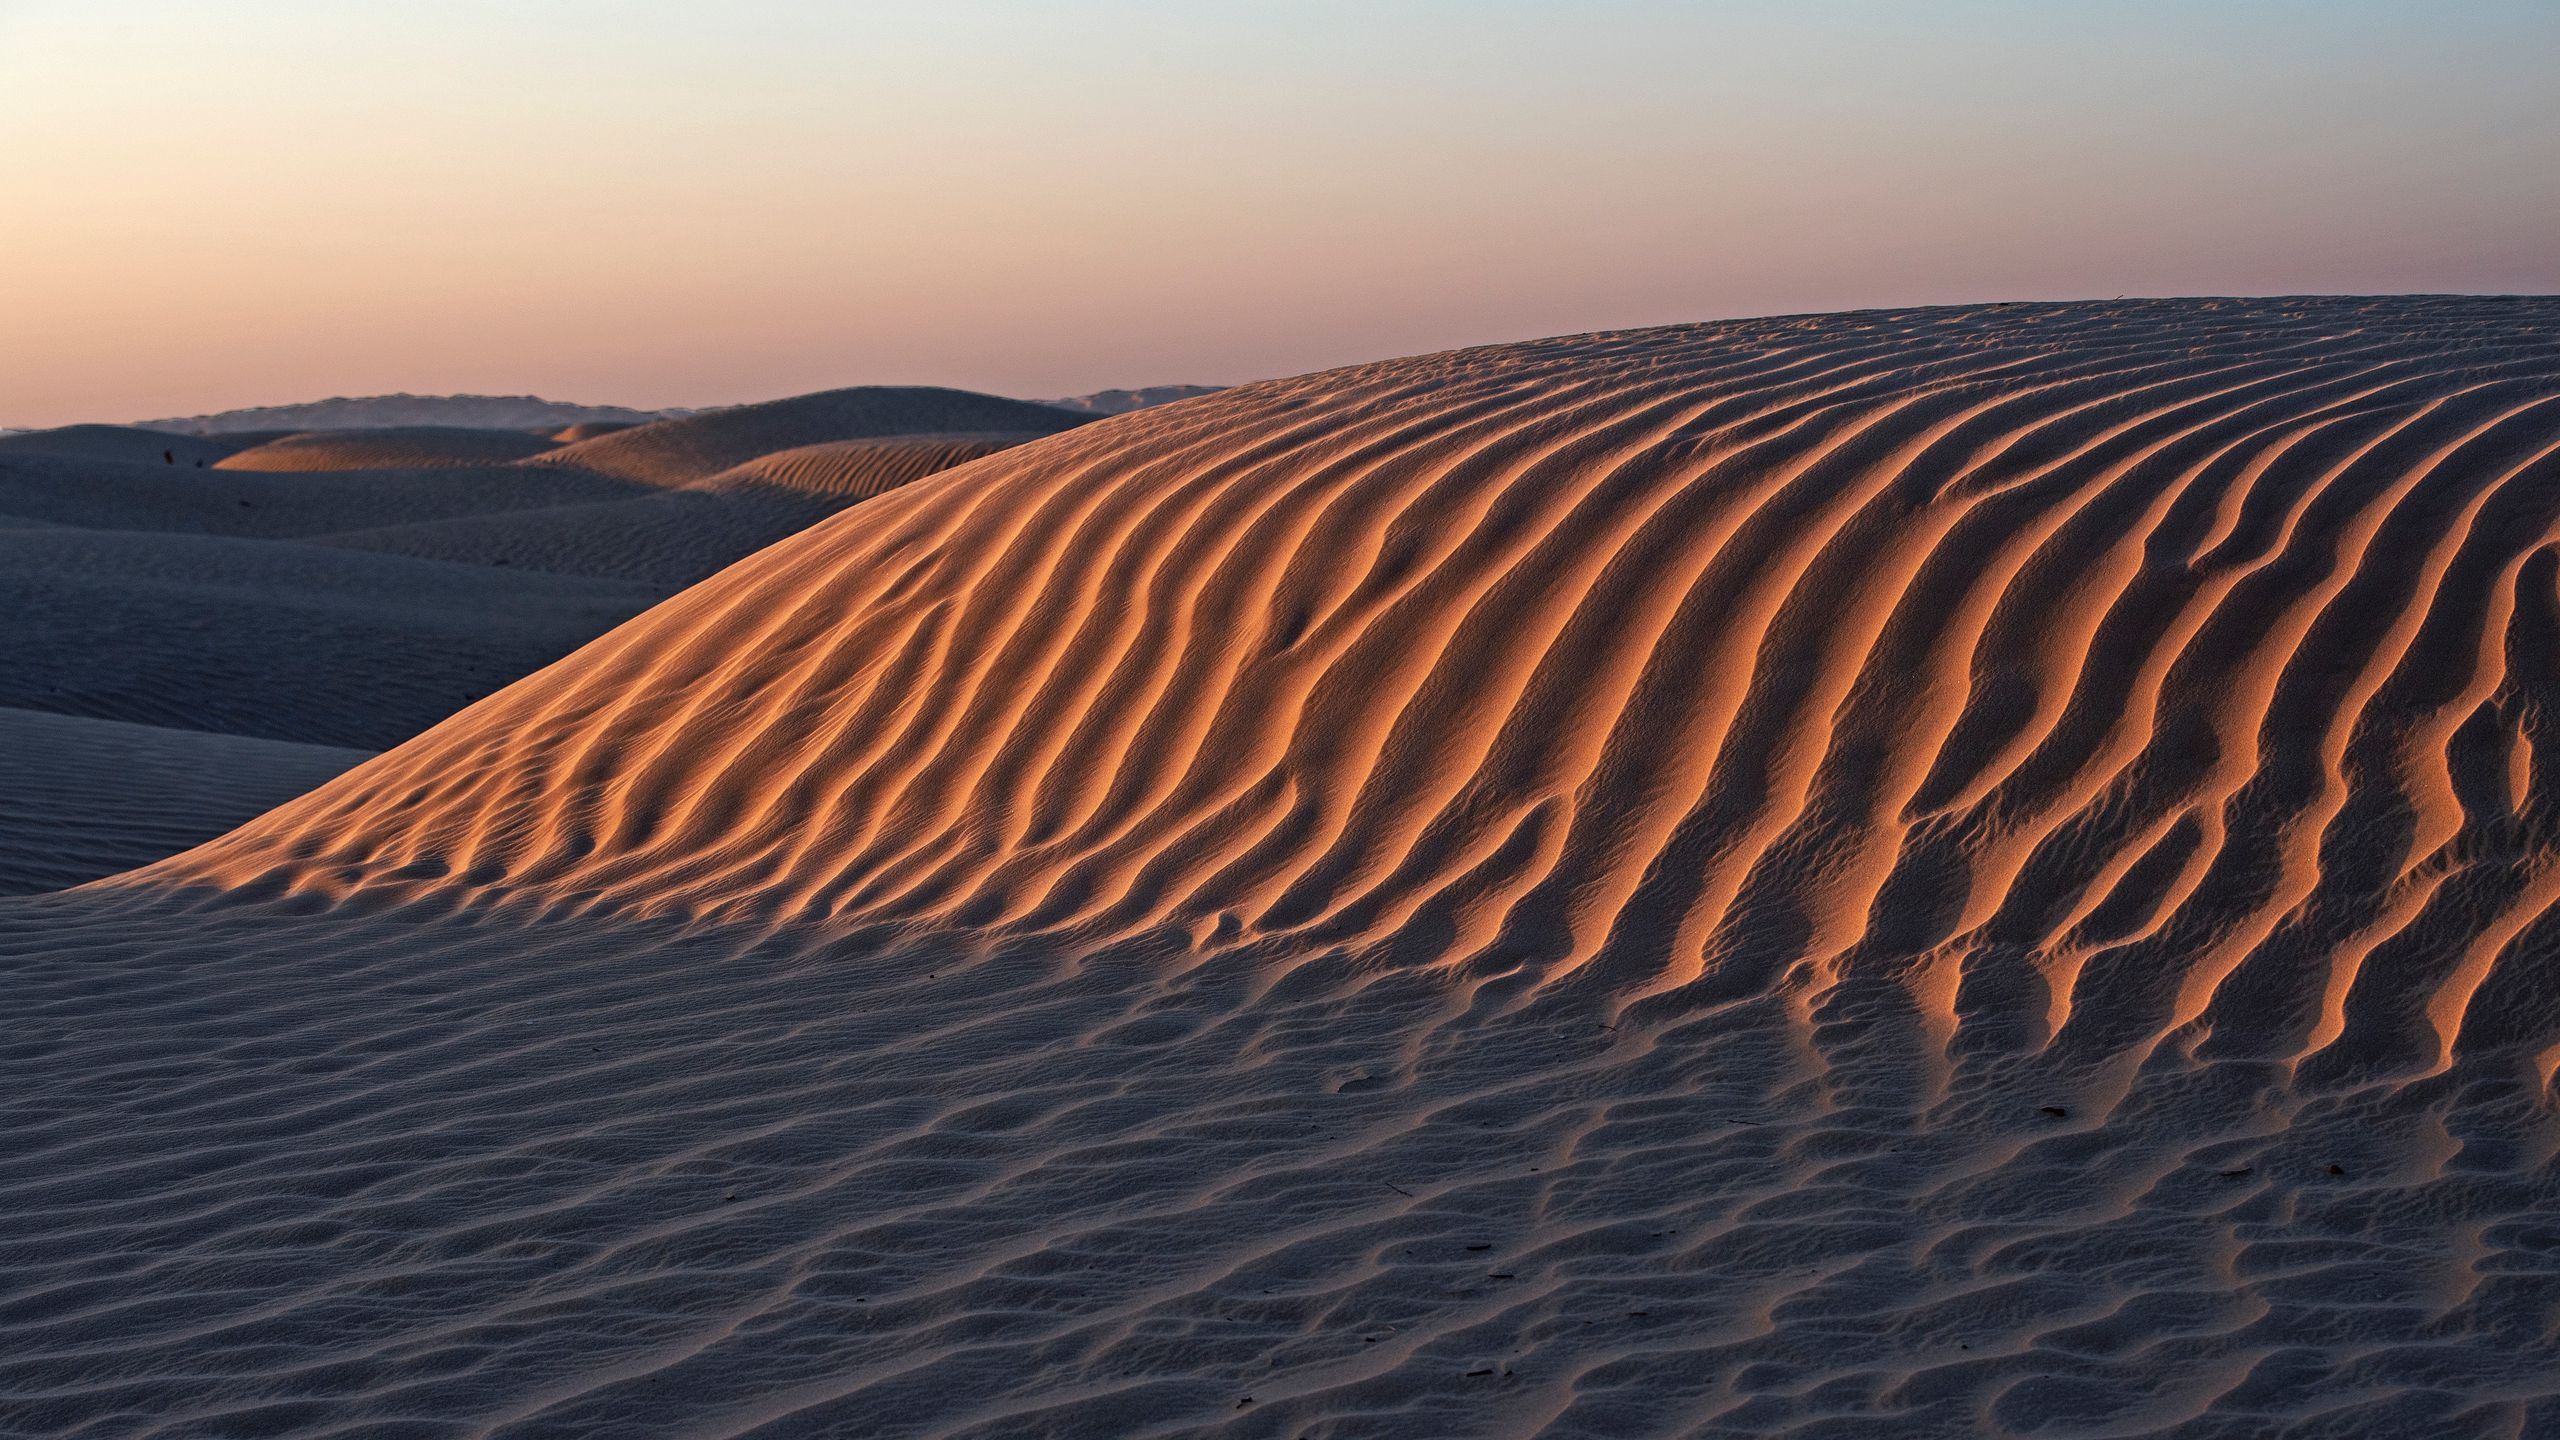 Download Wallpaper 2560x1440 Desert Sand Dunes Hills Landscape